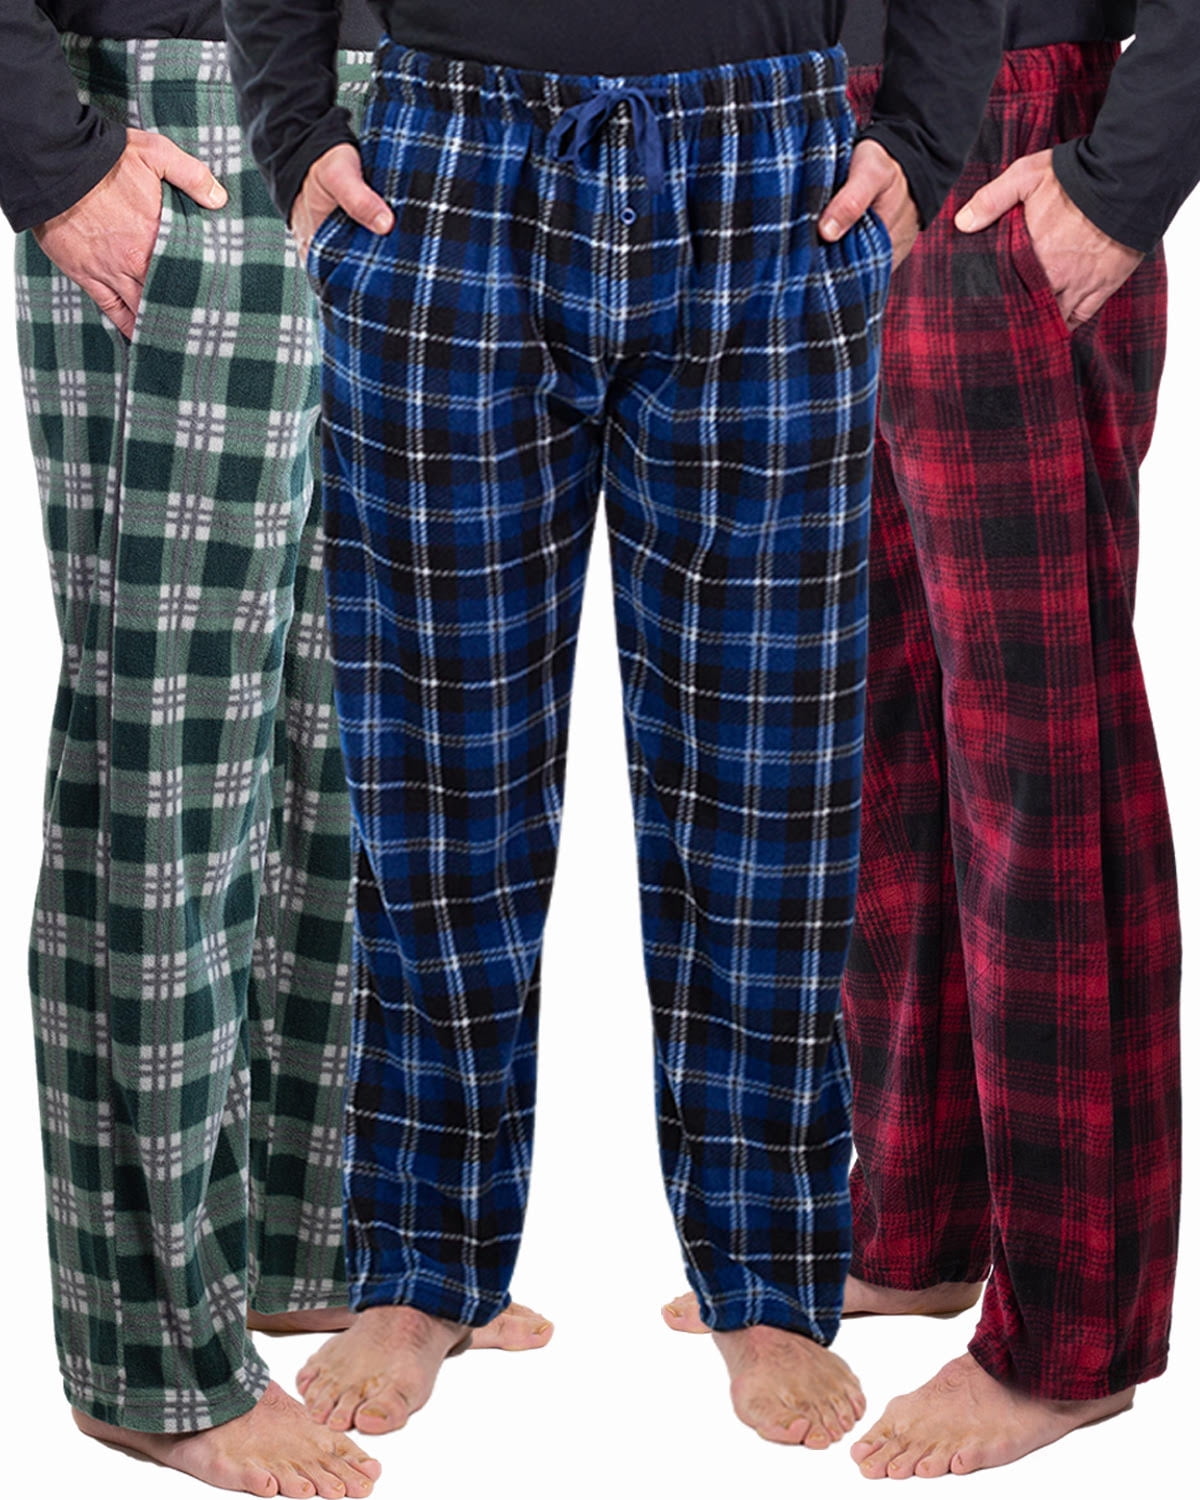 Sizes M & L. Men's Soft Fleece Drawstring Blue & Black Star Print Pyjama Pants 